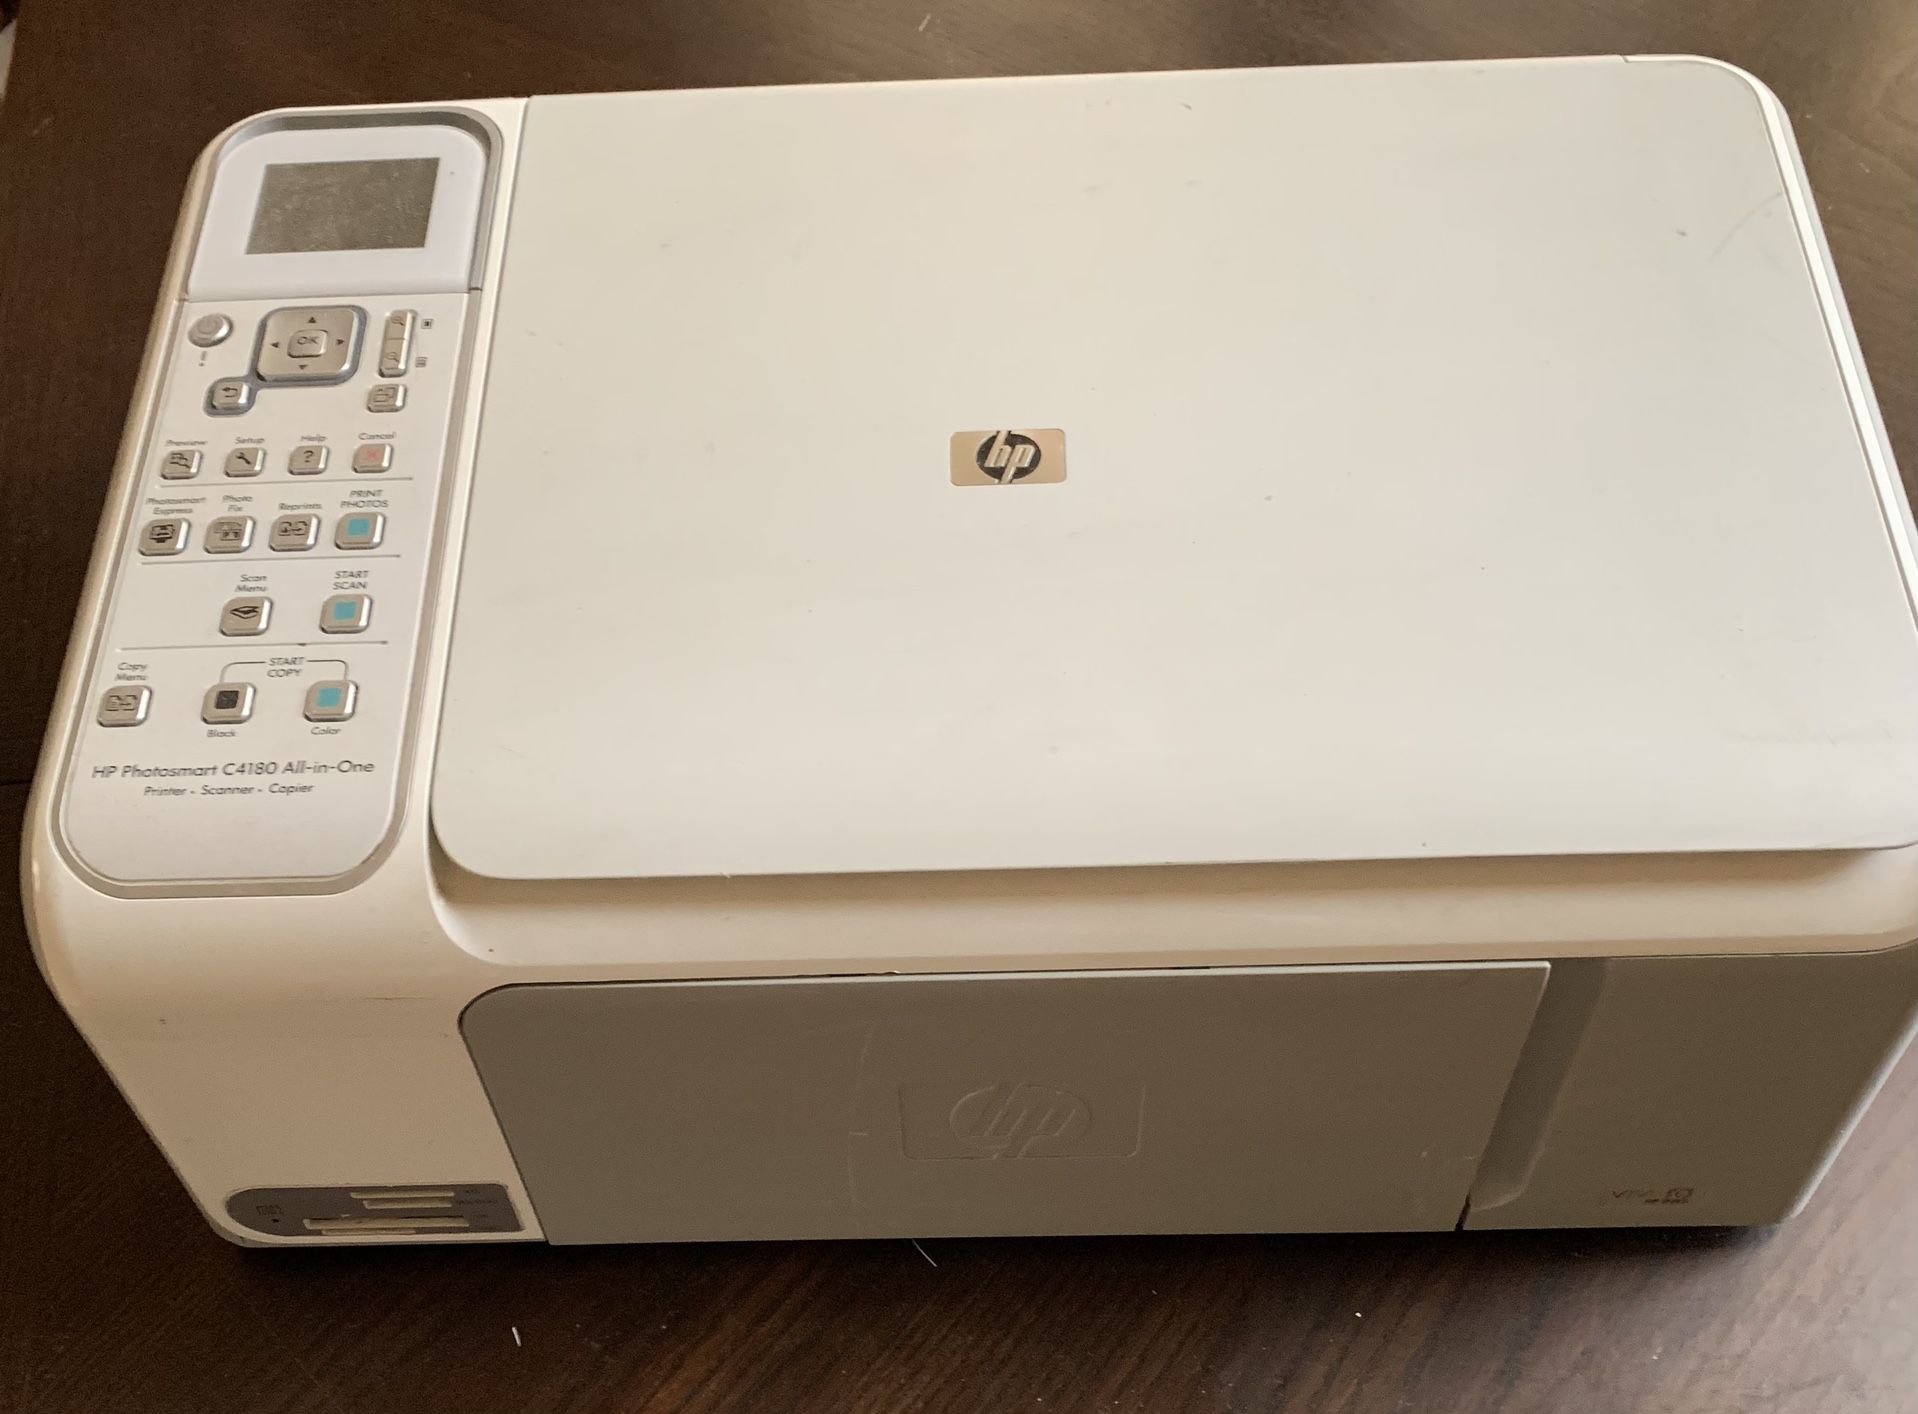 HP Photo Smart C4180 All-in-one Printer, Scanner, Copier